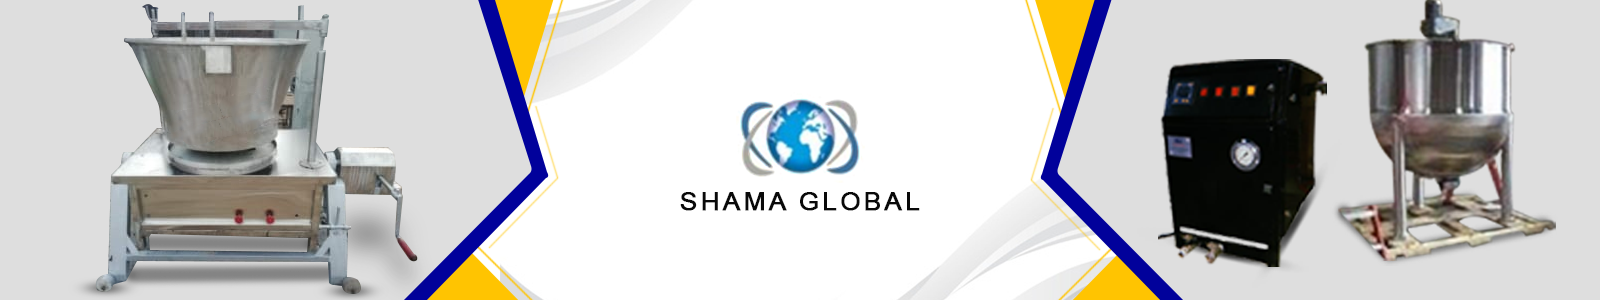 Shama Global